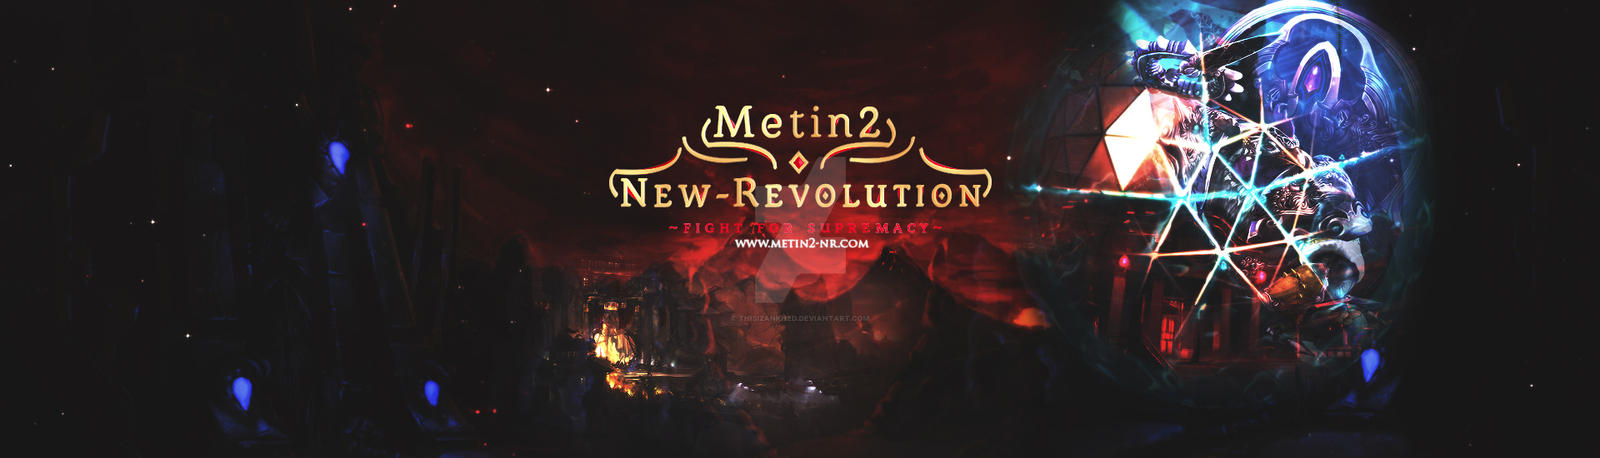 forum_header_metin2_new_revolution_by_th